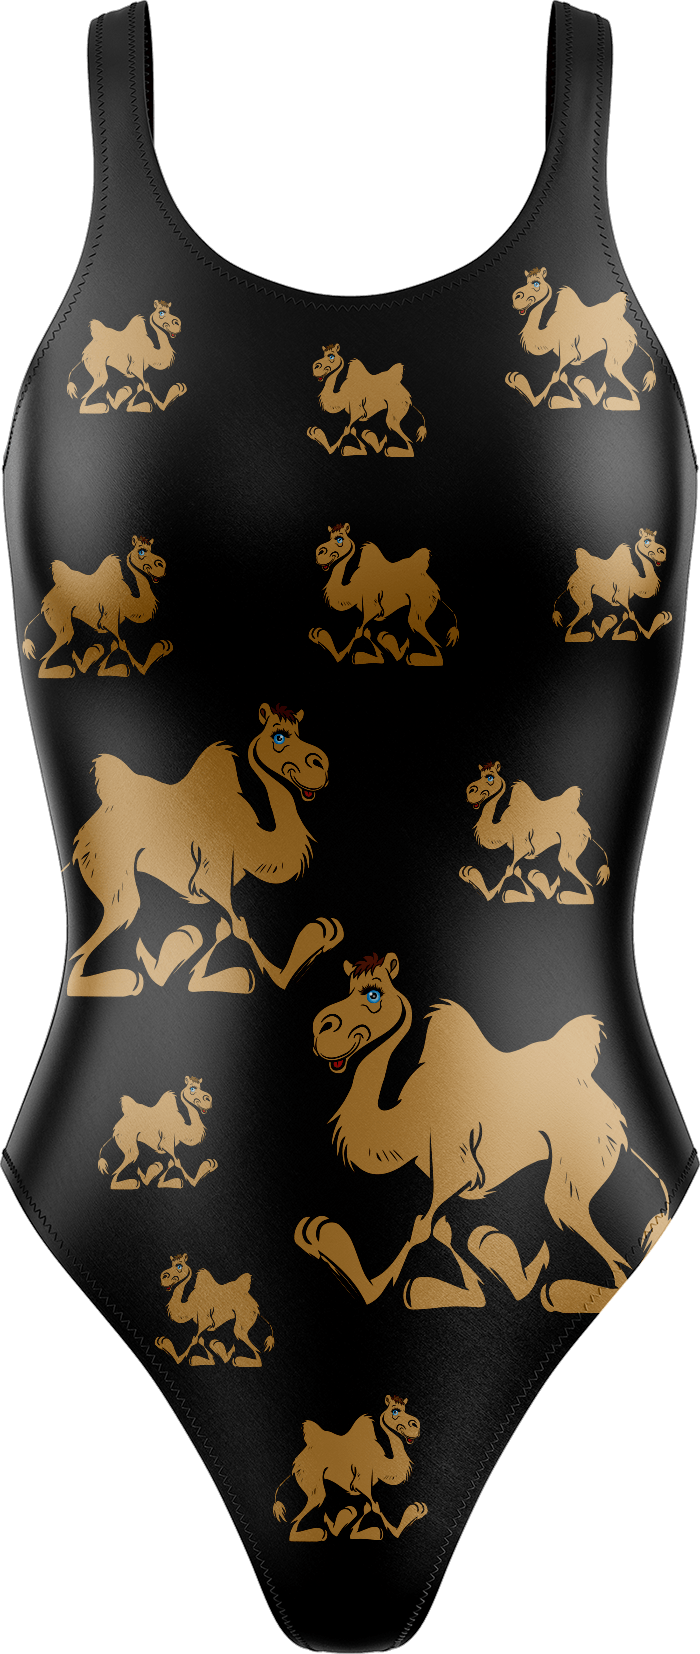 Crafty Camel Swimsuits - fungear.com.au